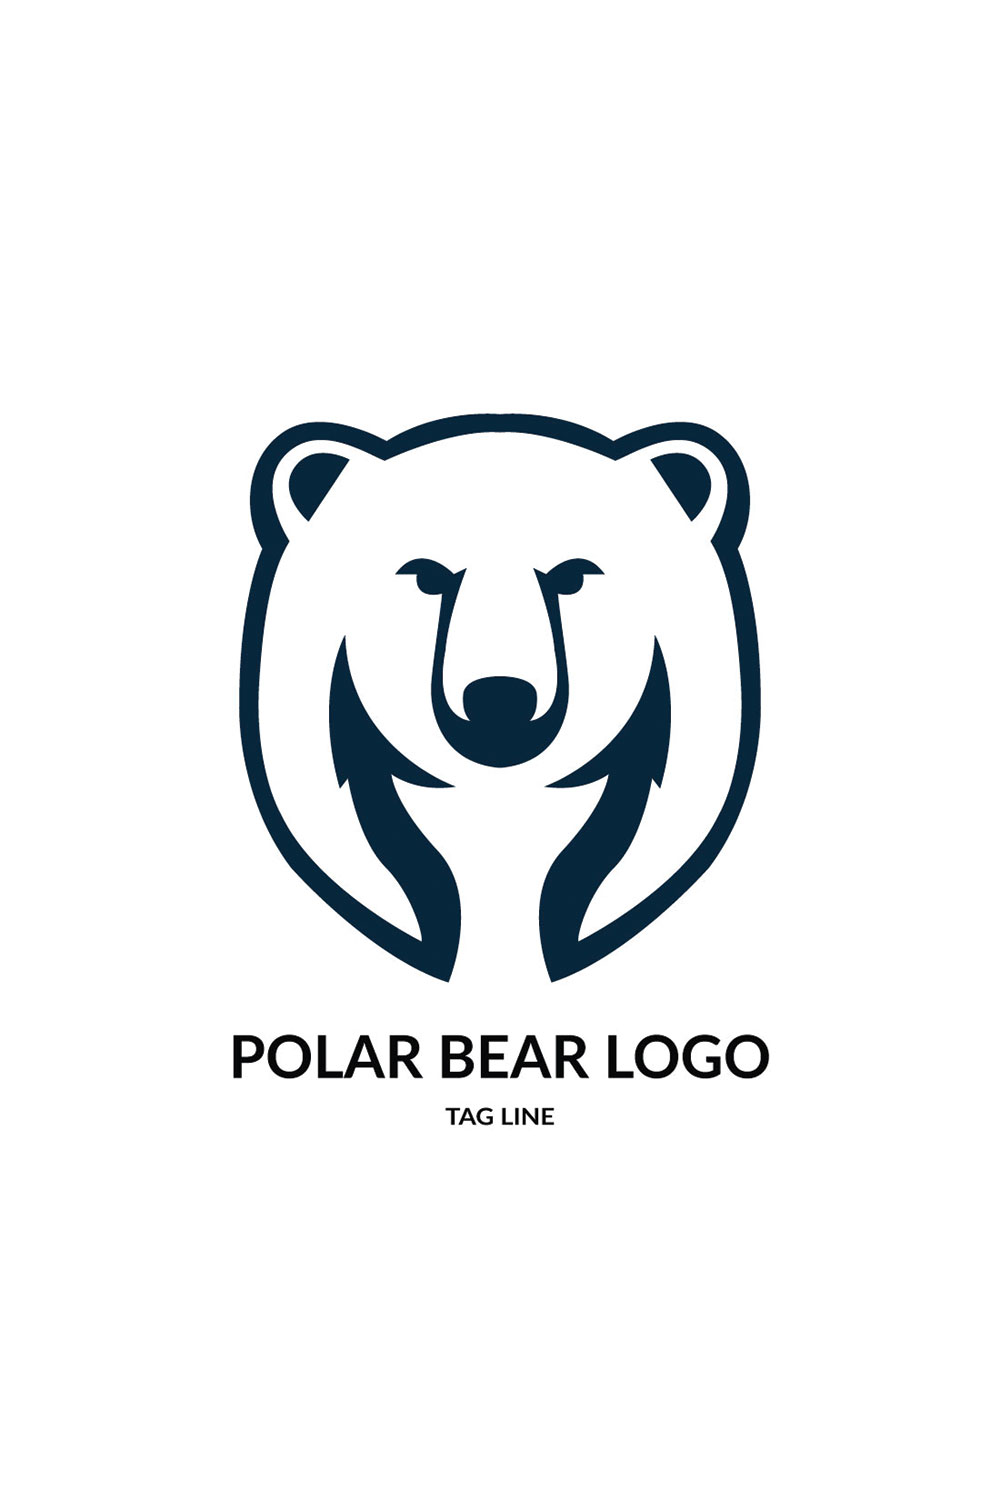 Polar bear logo Template pinterest preview image.